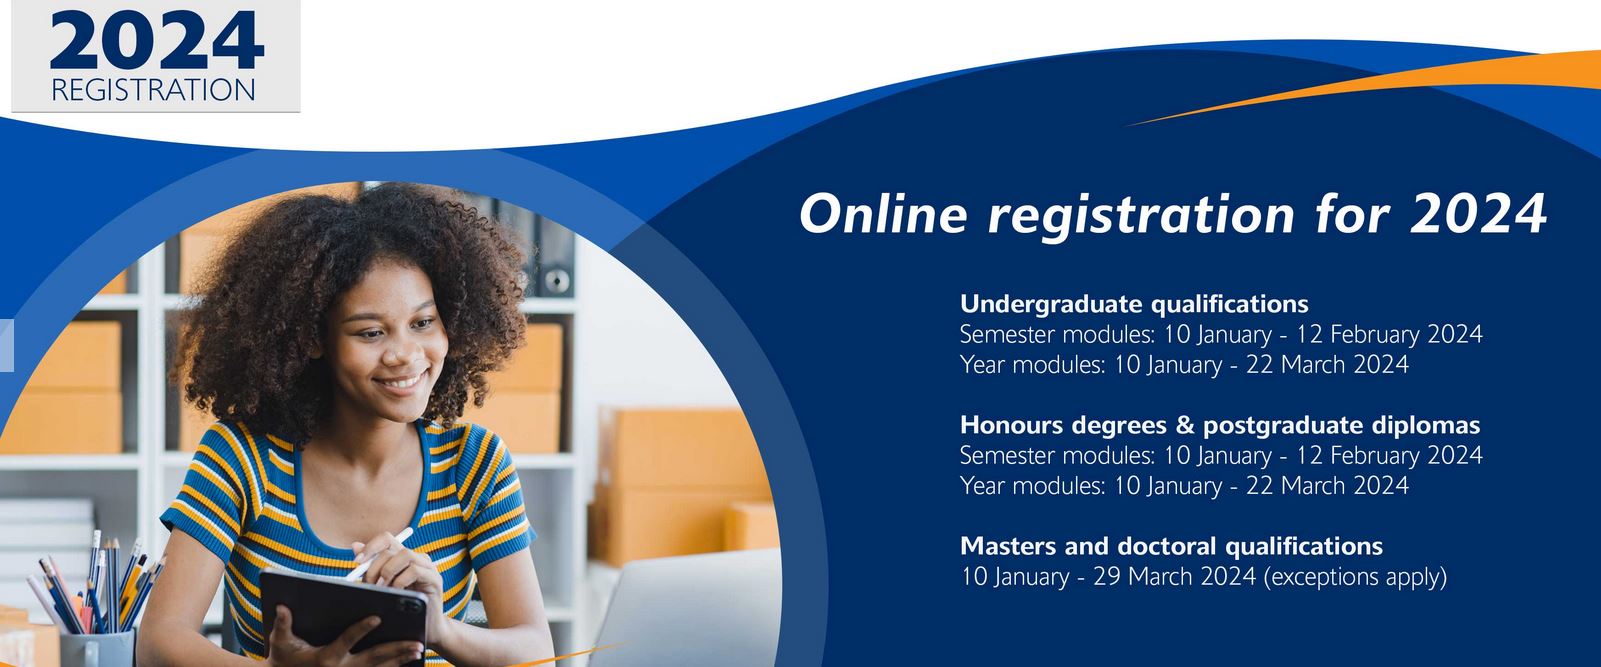 UNISA Registration Dates for 2024 First 1 Semester www.unisa.ac.za